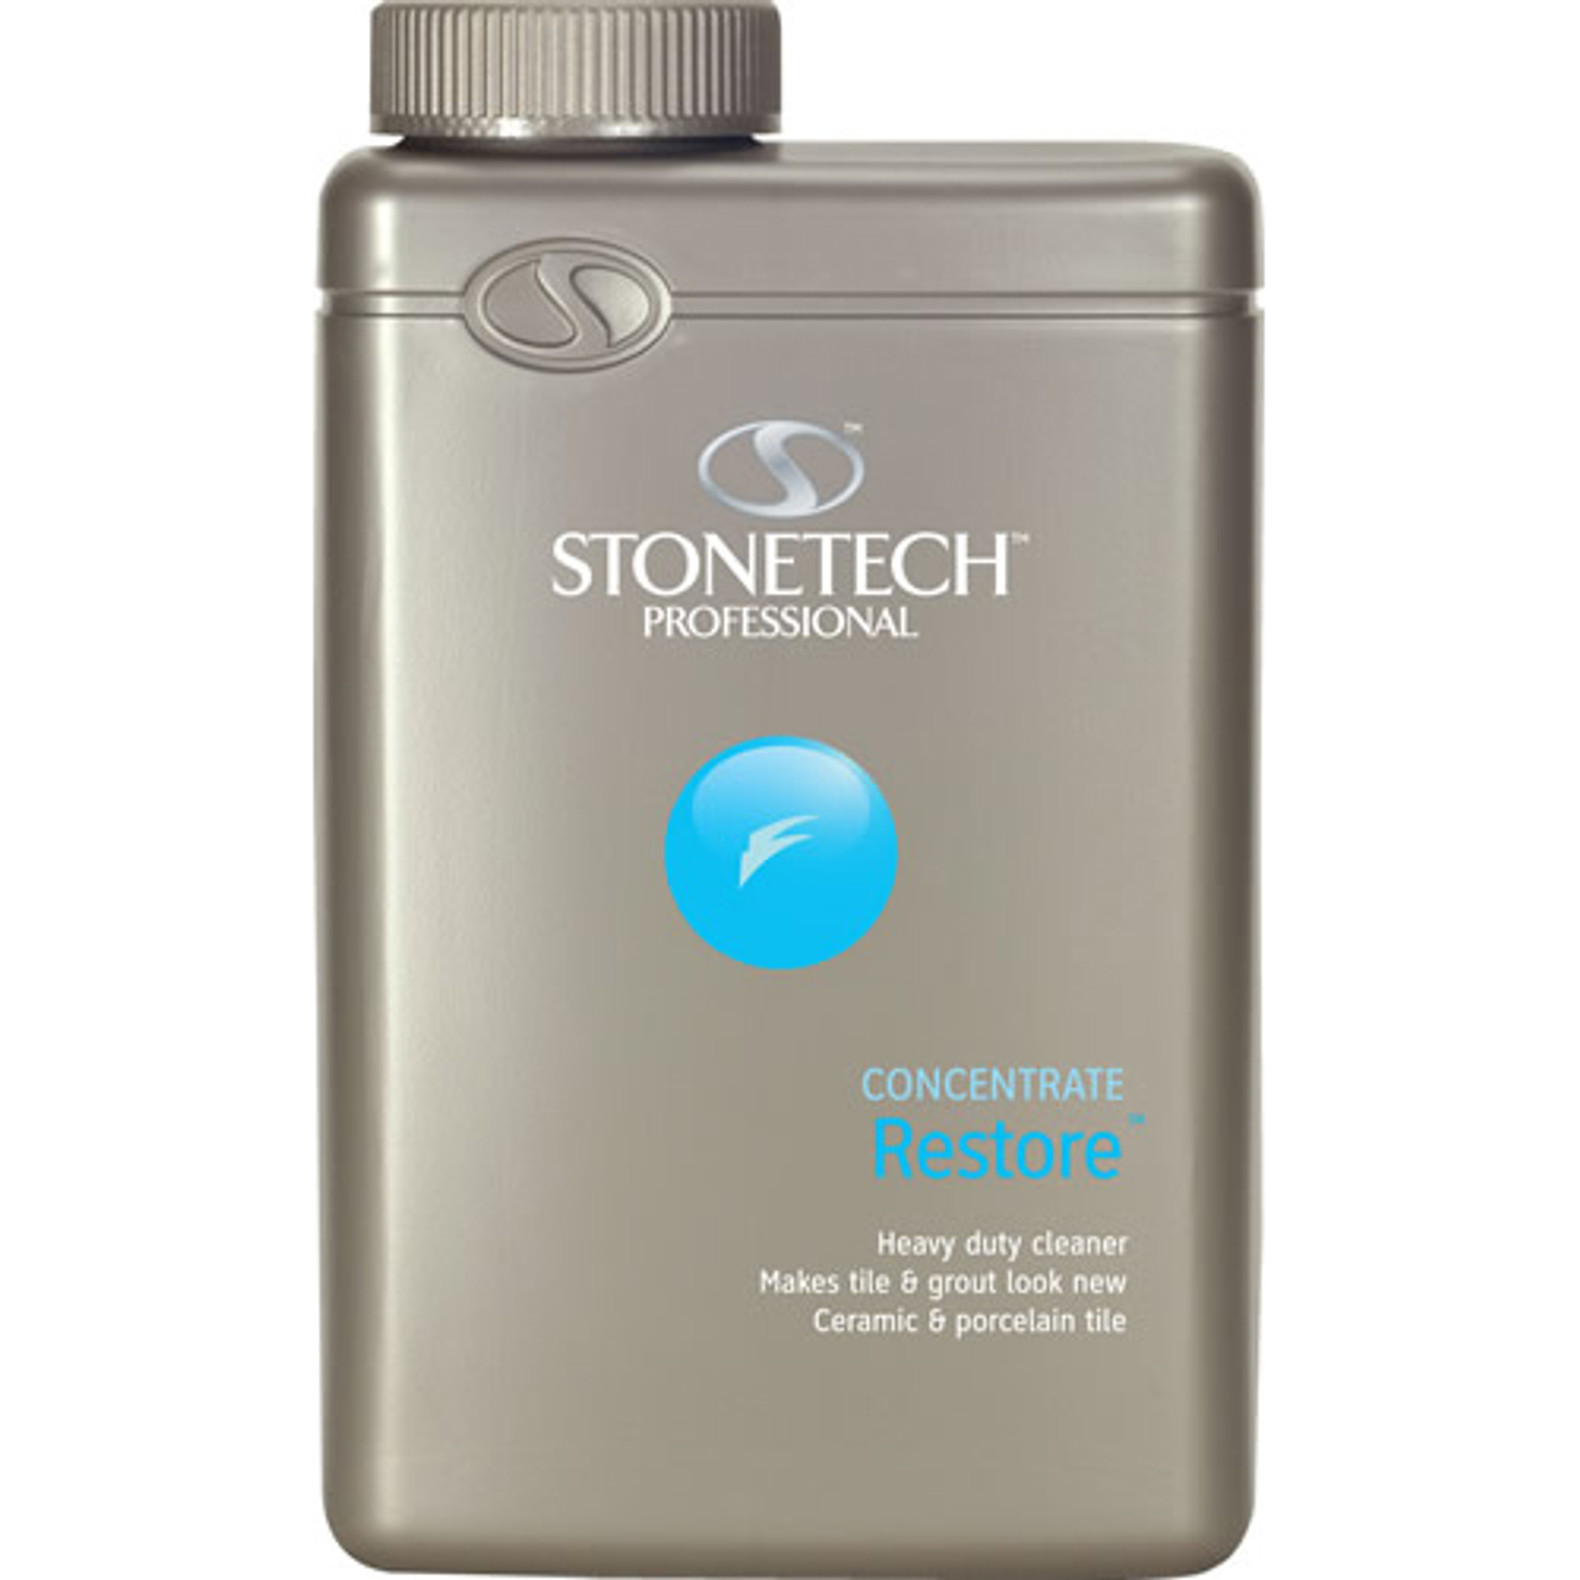 STONETECH Restore Acidic Cleaner